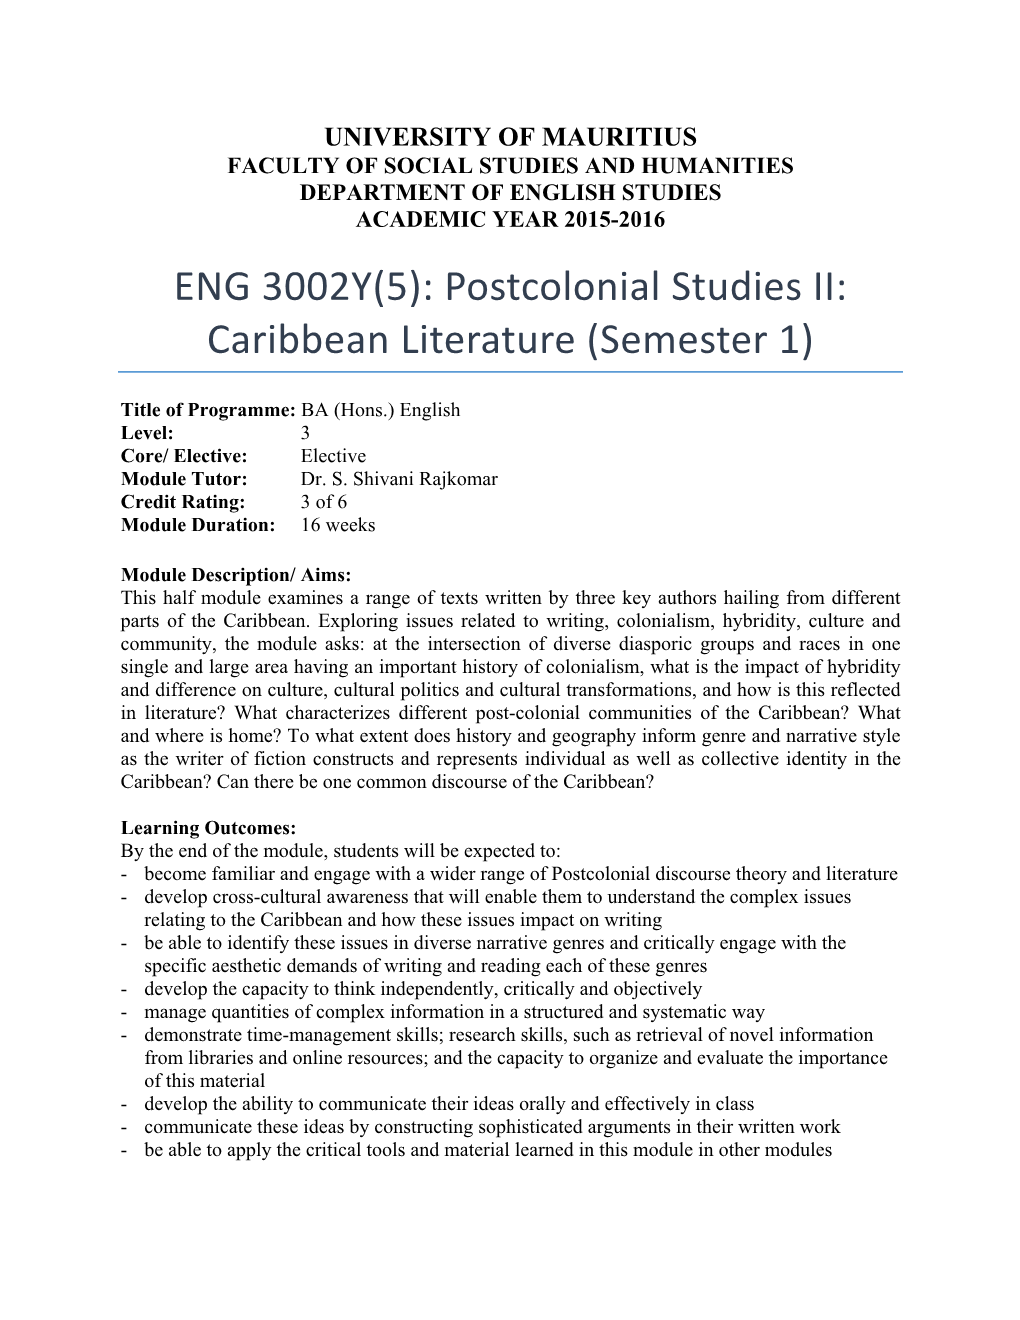 ENG 3002Y(5): Postcolonial Studies II: Caribbean Literature (Semester 1)